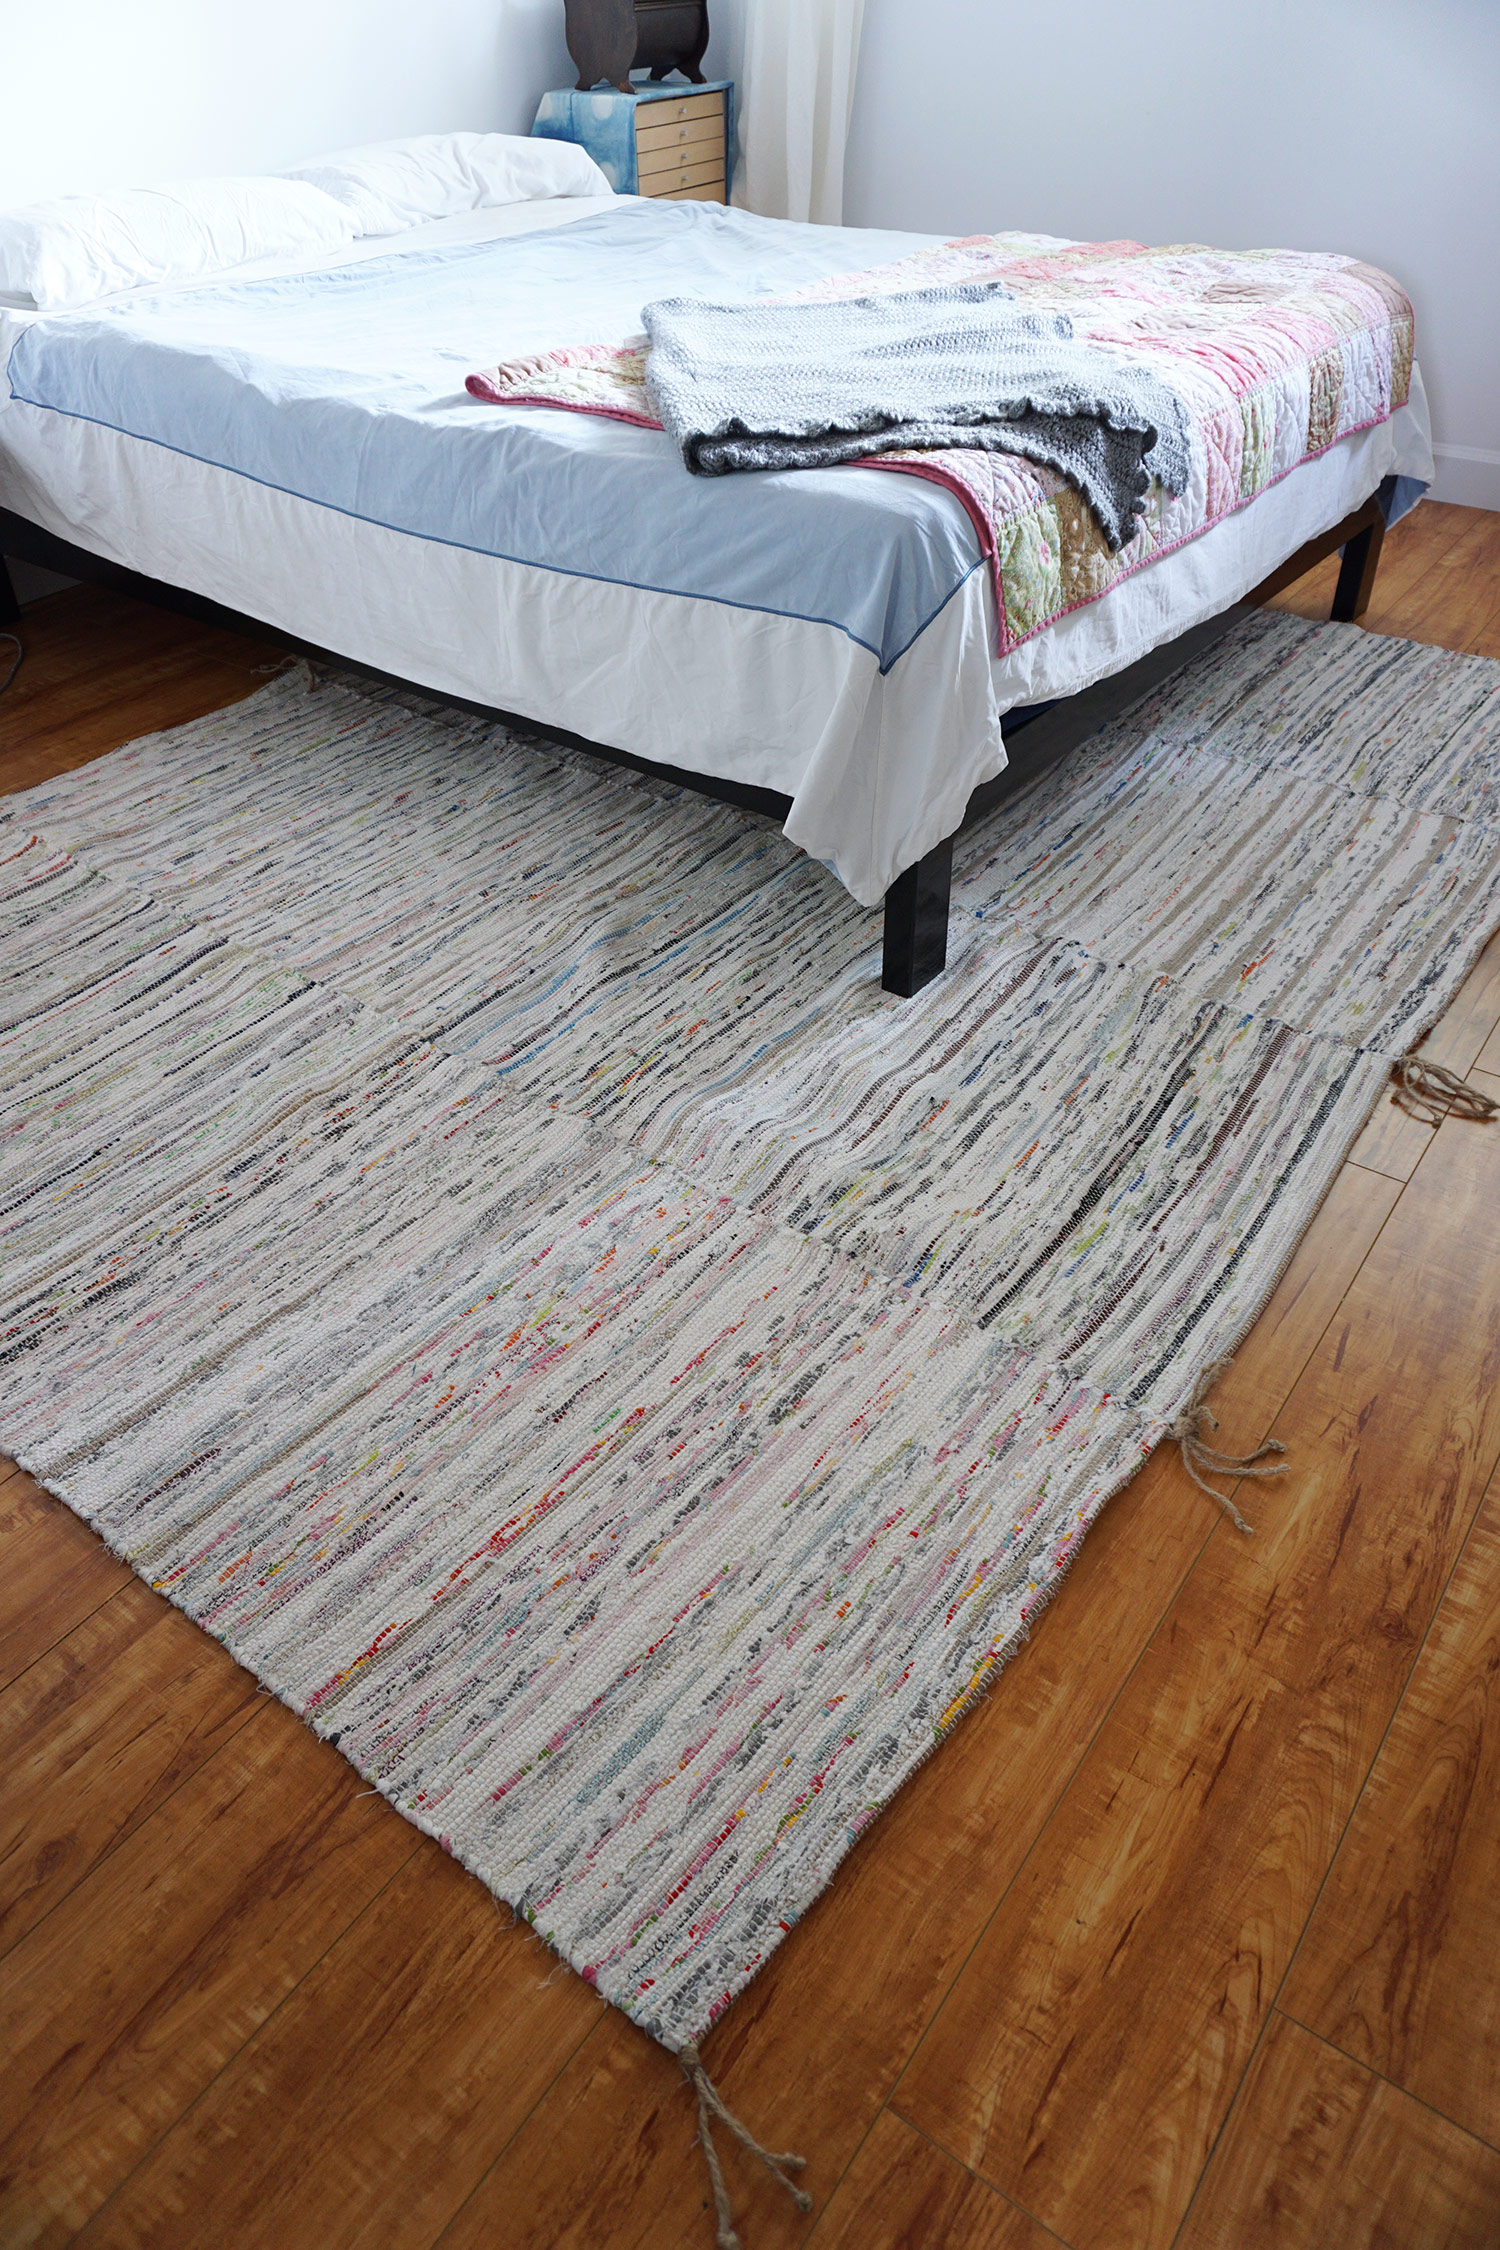 Small rugs - Runner rugs - IKEA